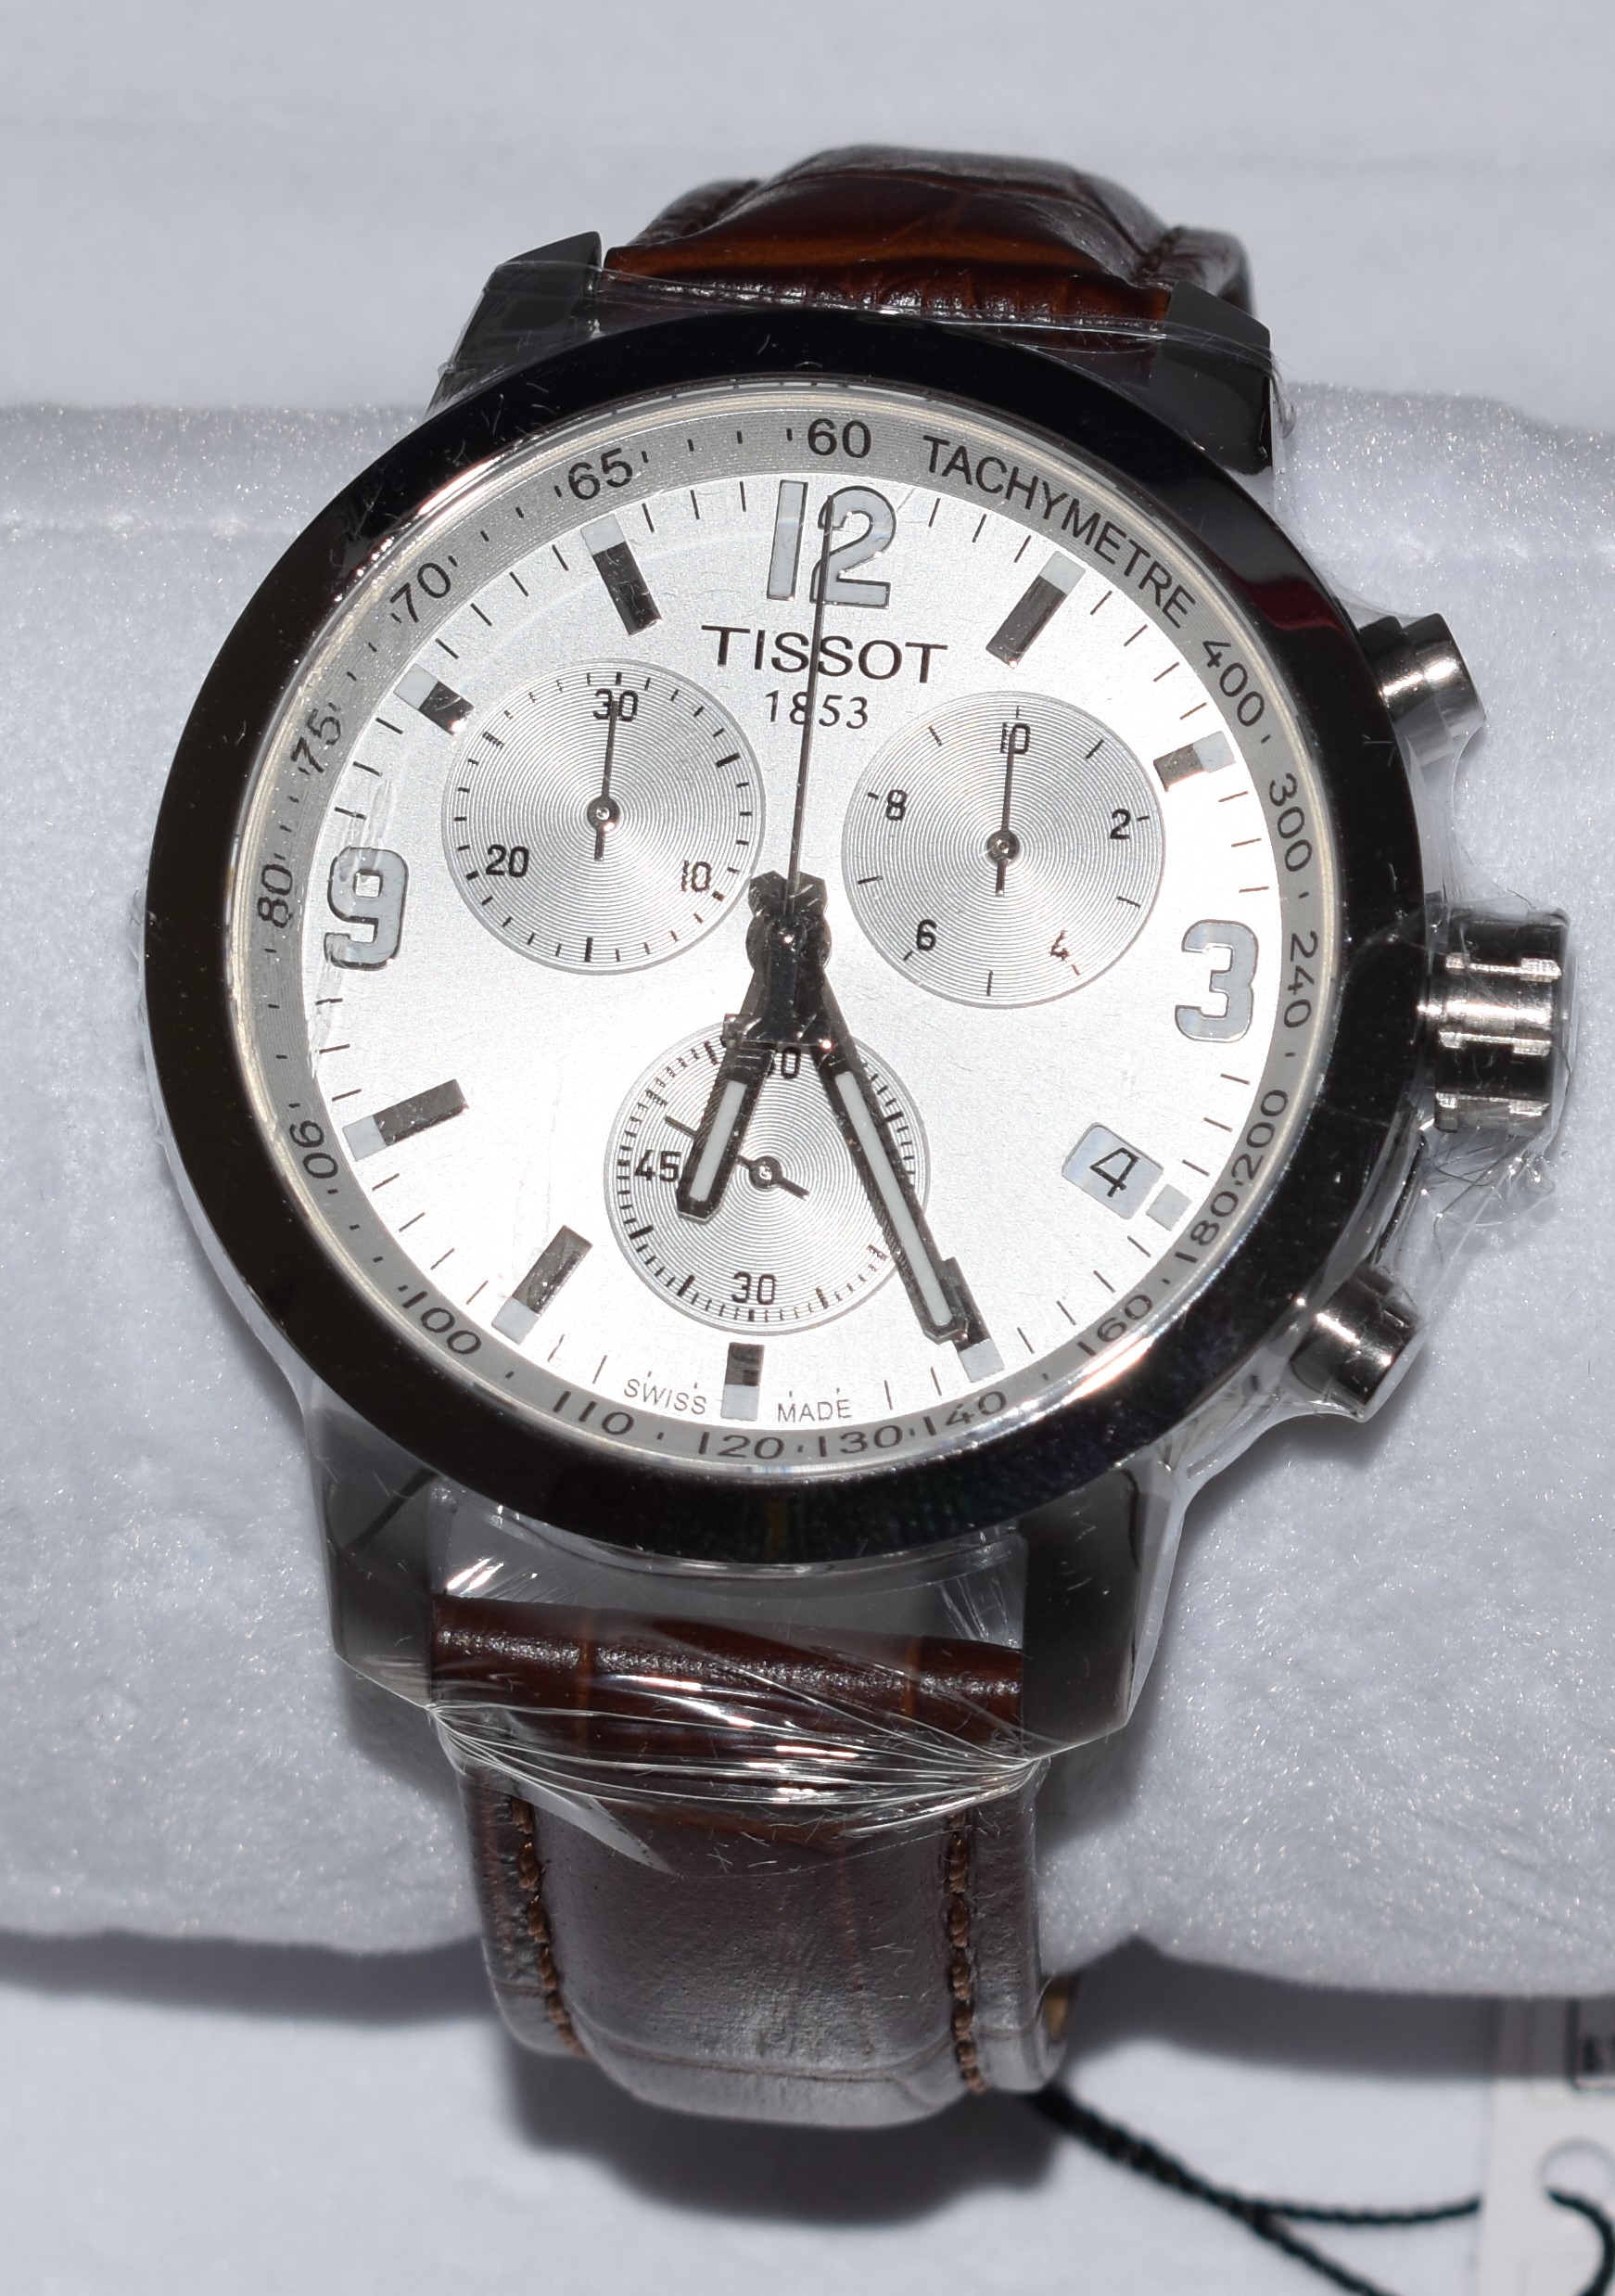 Tissot Men's Watch TO55.417.16.037.00 - Image 3 of 3